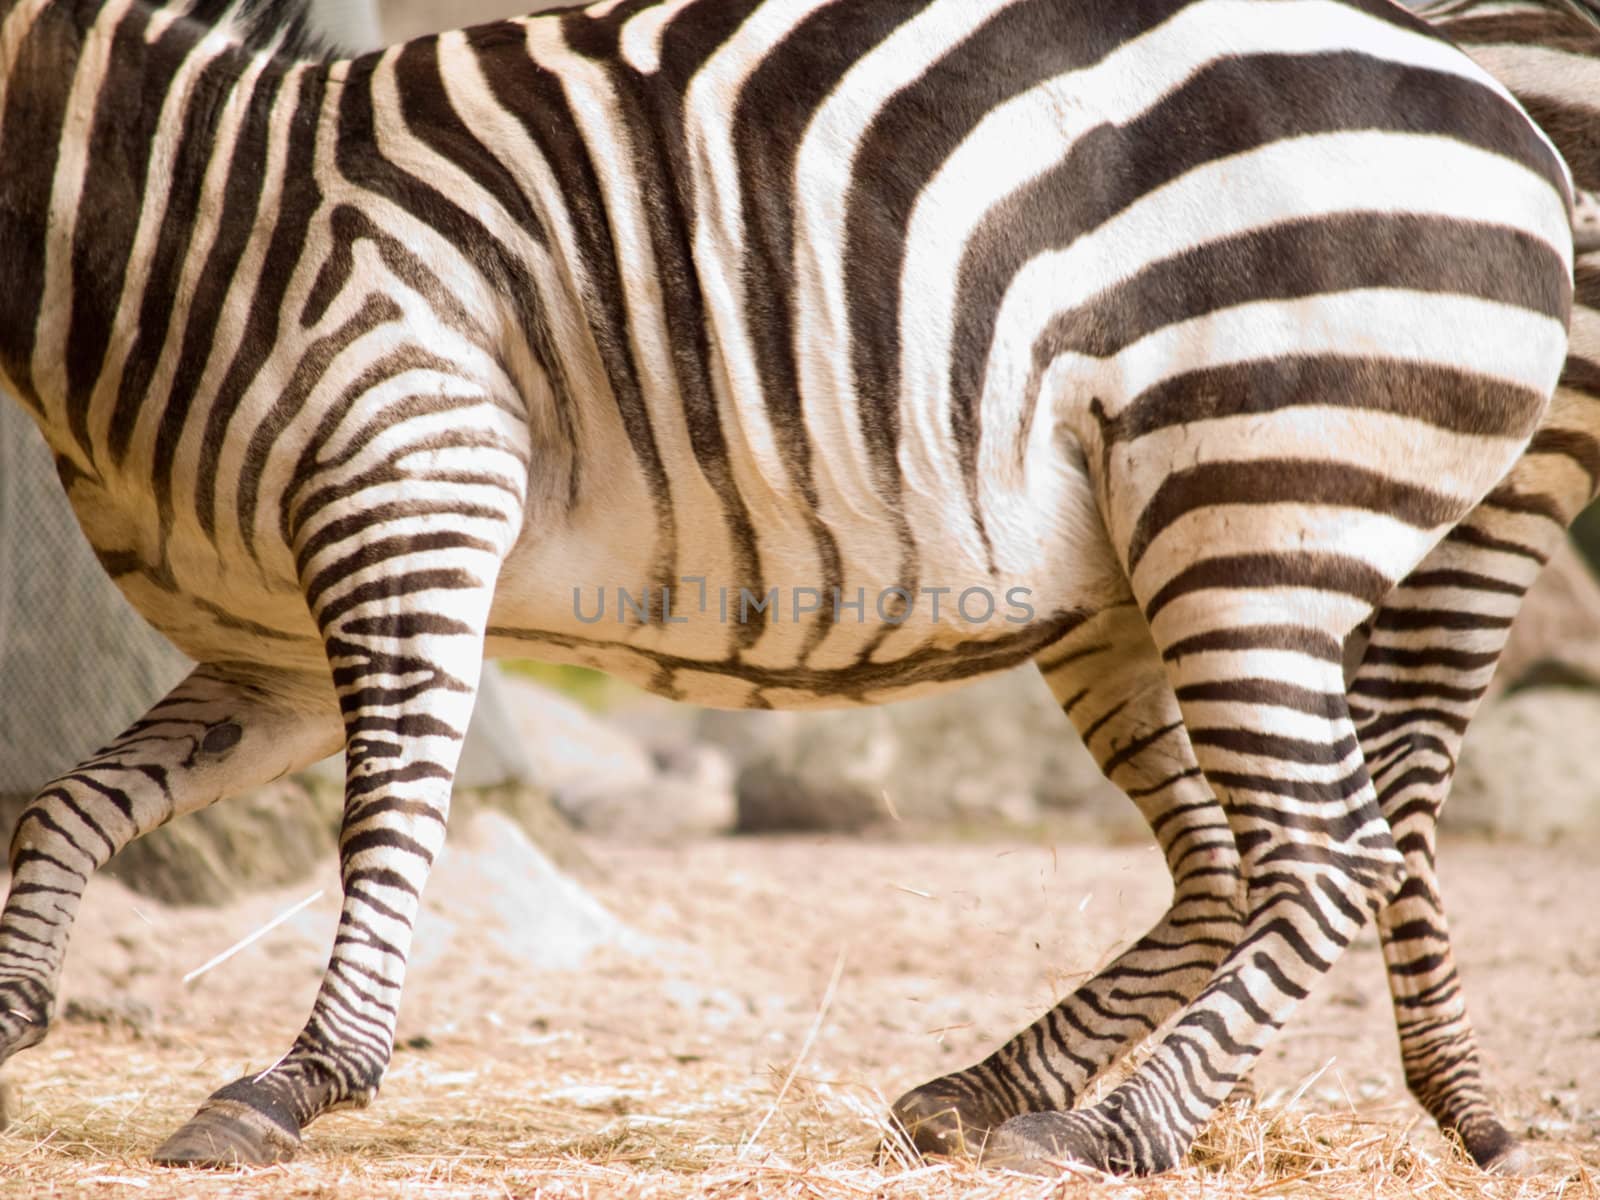 Spooked zebra in the african  savanna 